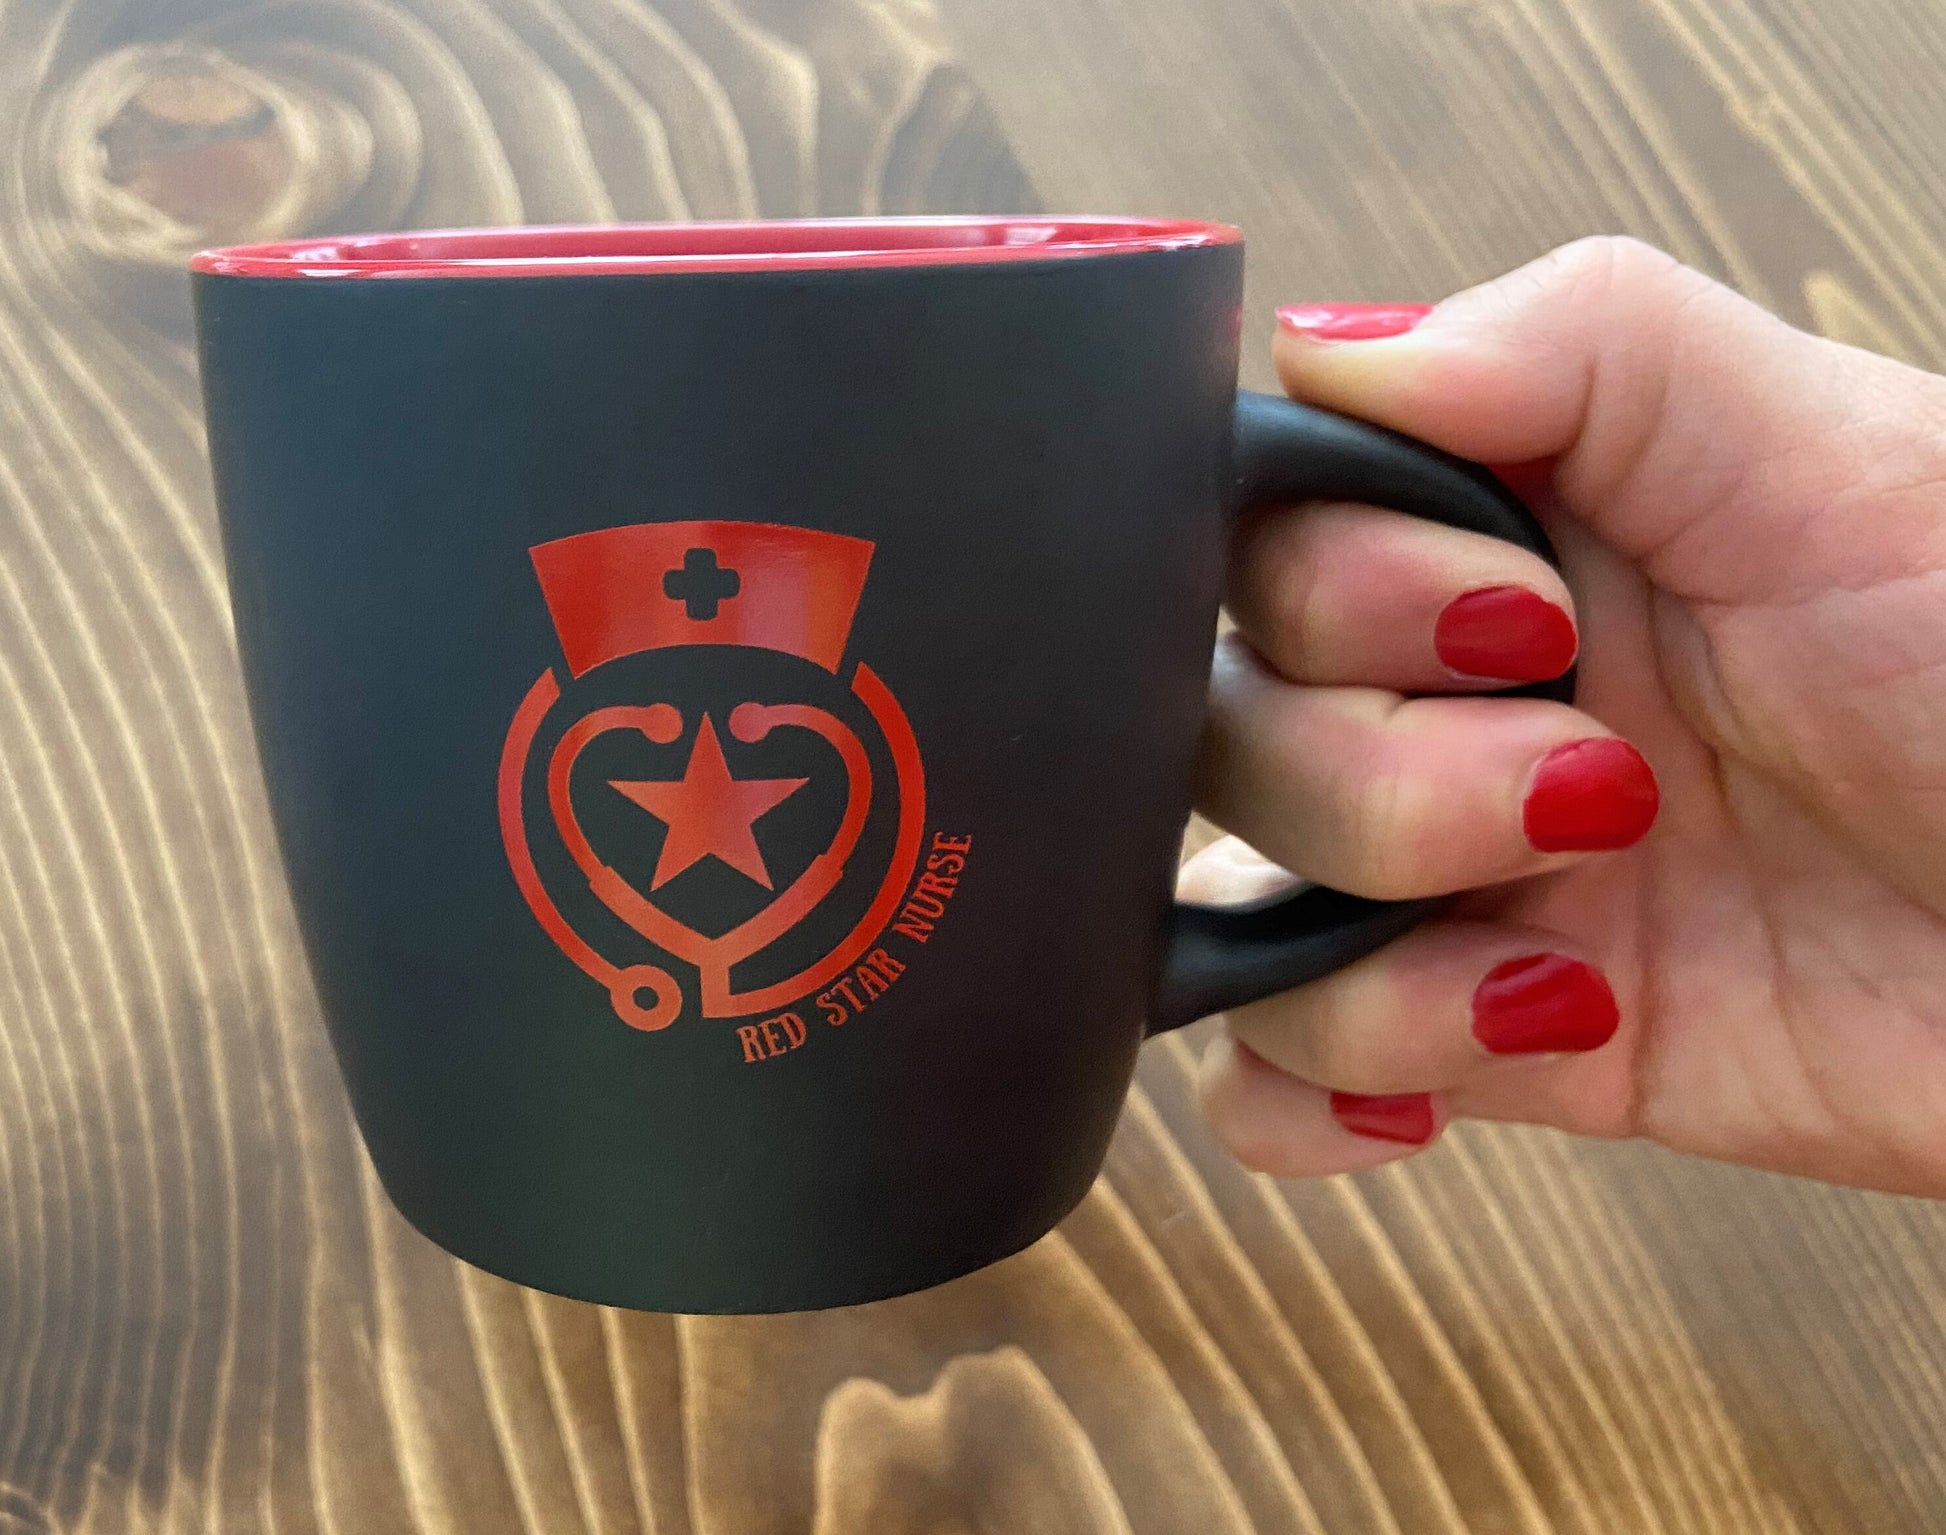 Red Star Nurse mug